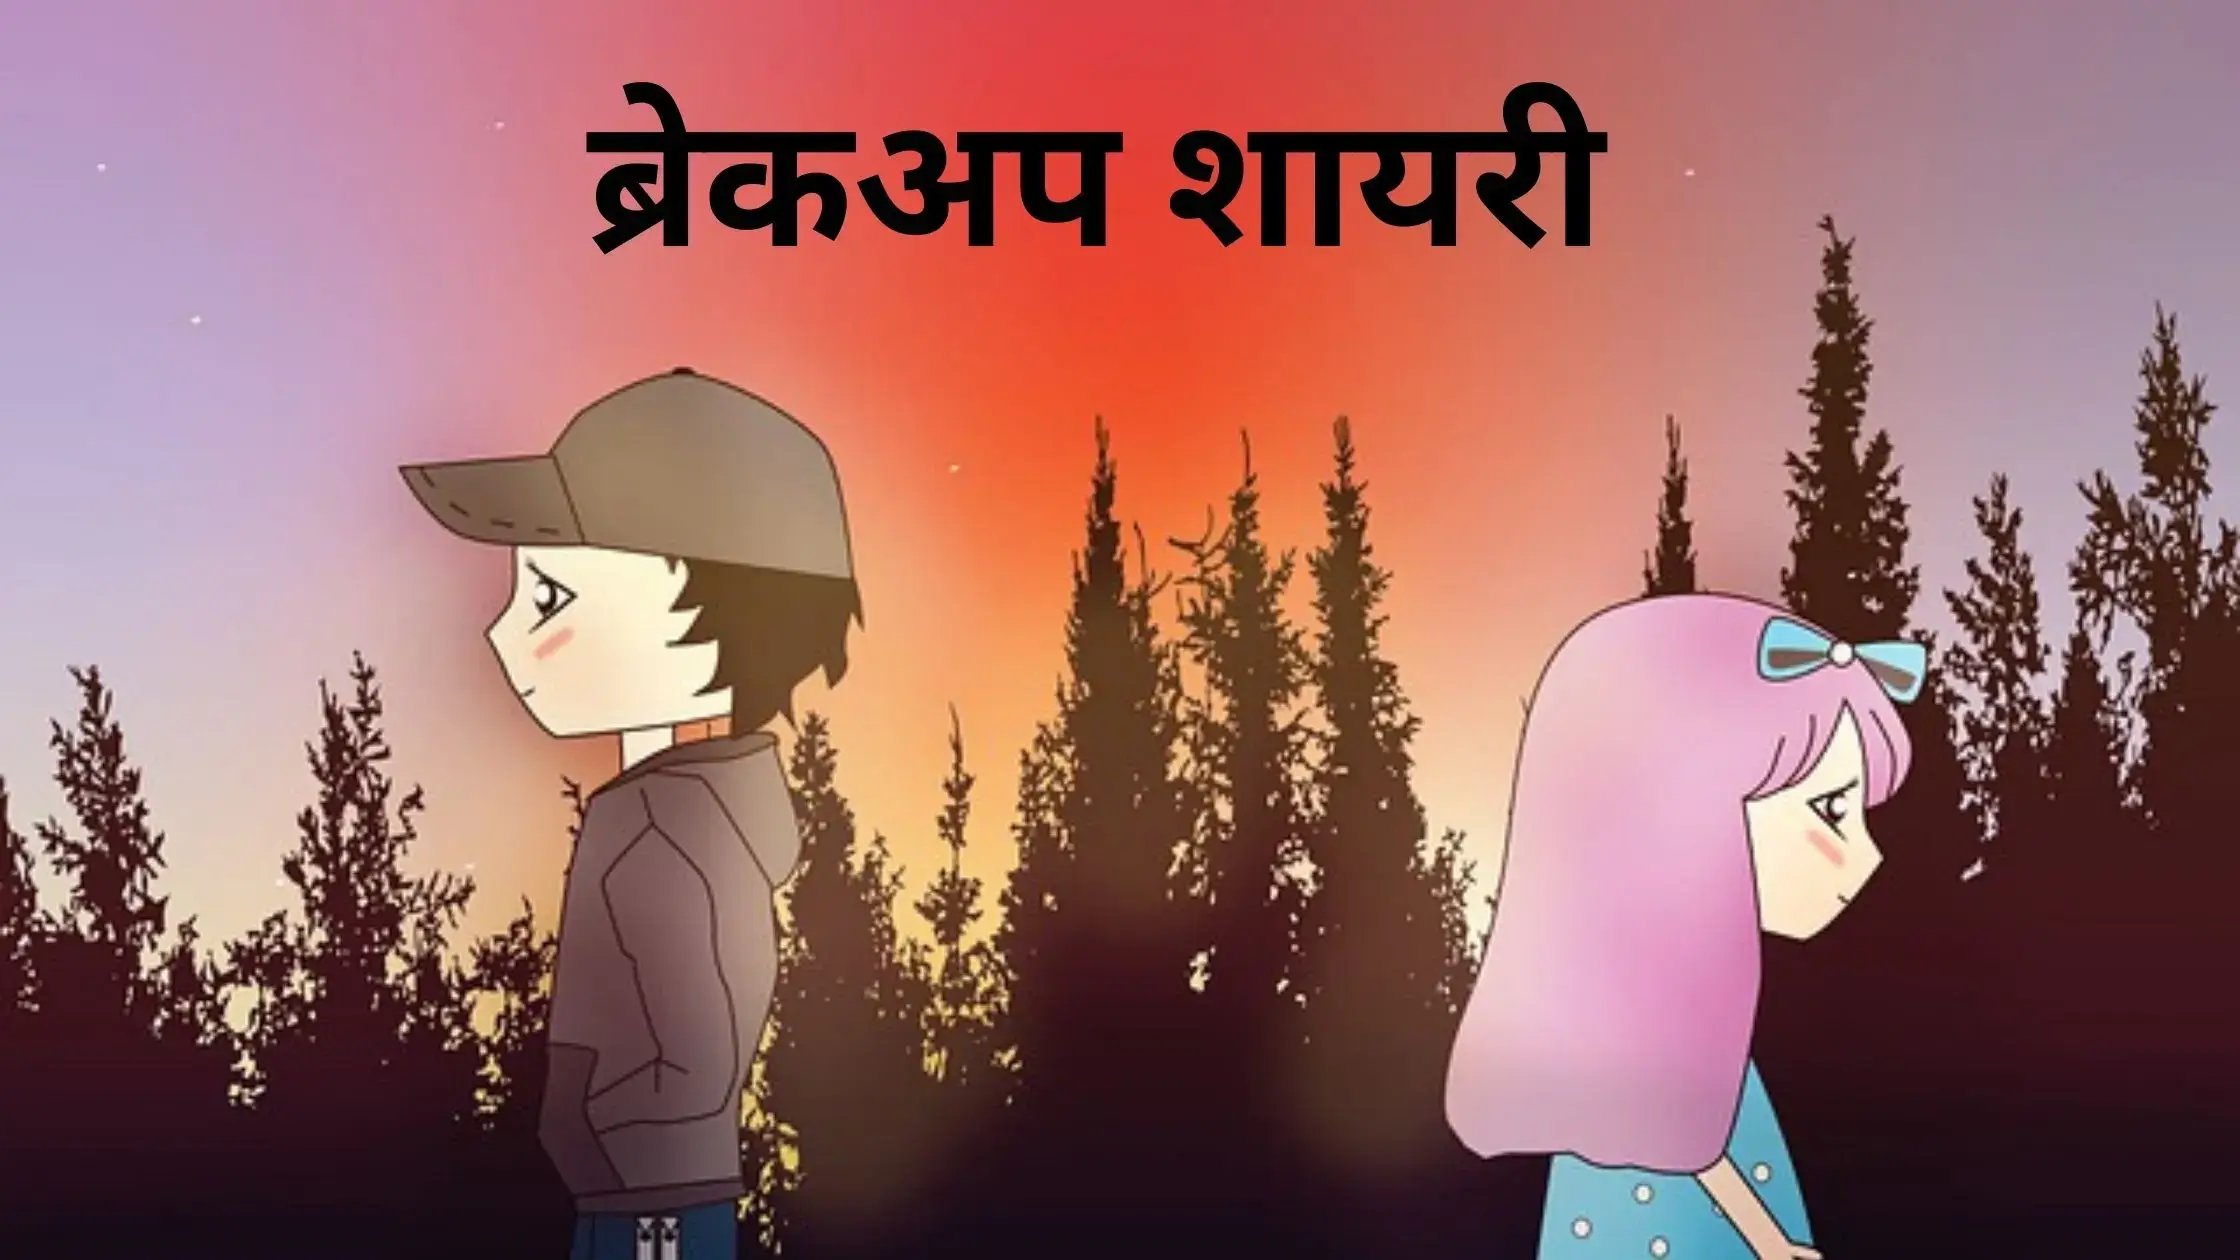 Breakup Shayari in Hindi